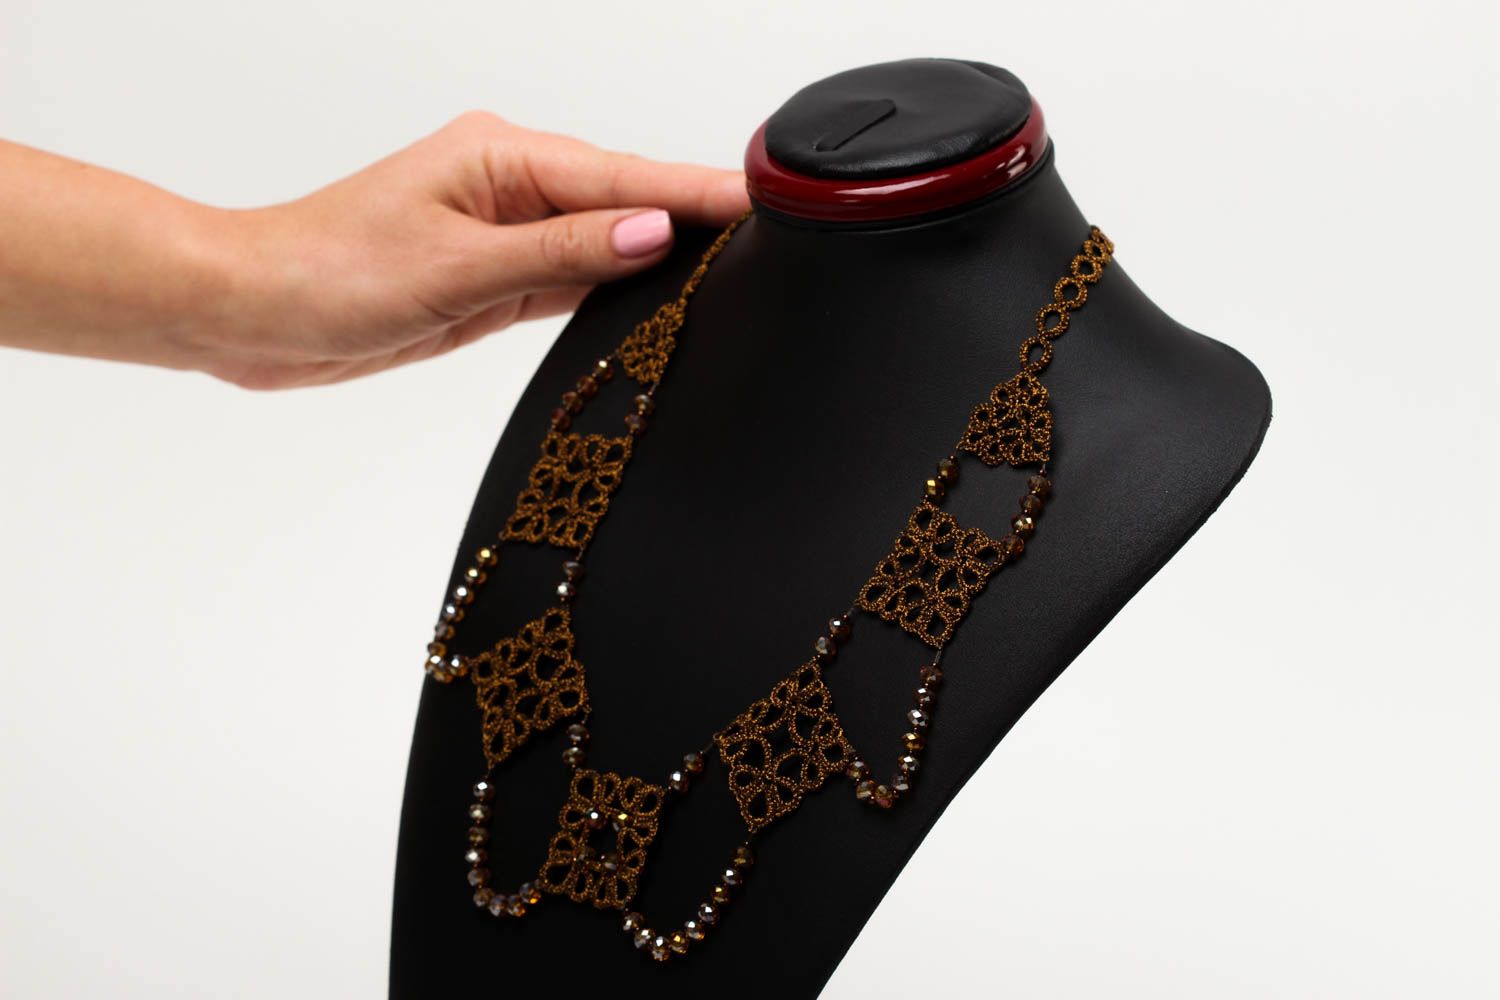 Unusual handmade textile necklace artisan jewelry designs neck accessories photo 2